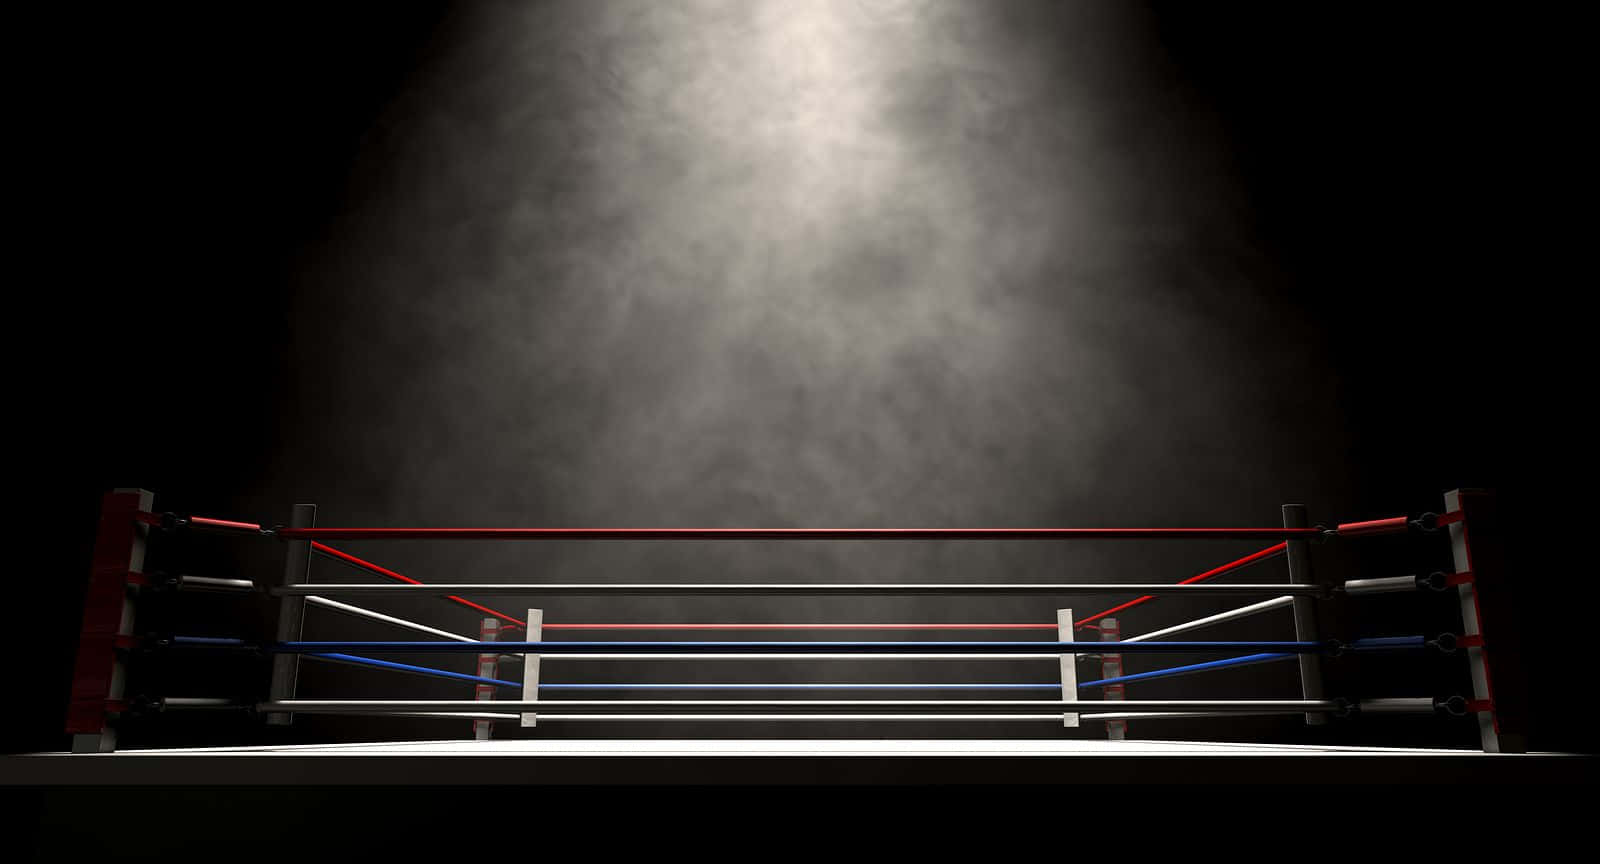 Professional Boxing Ring Under Spotlights